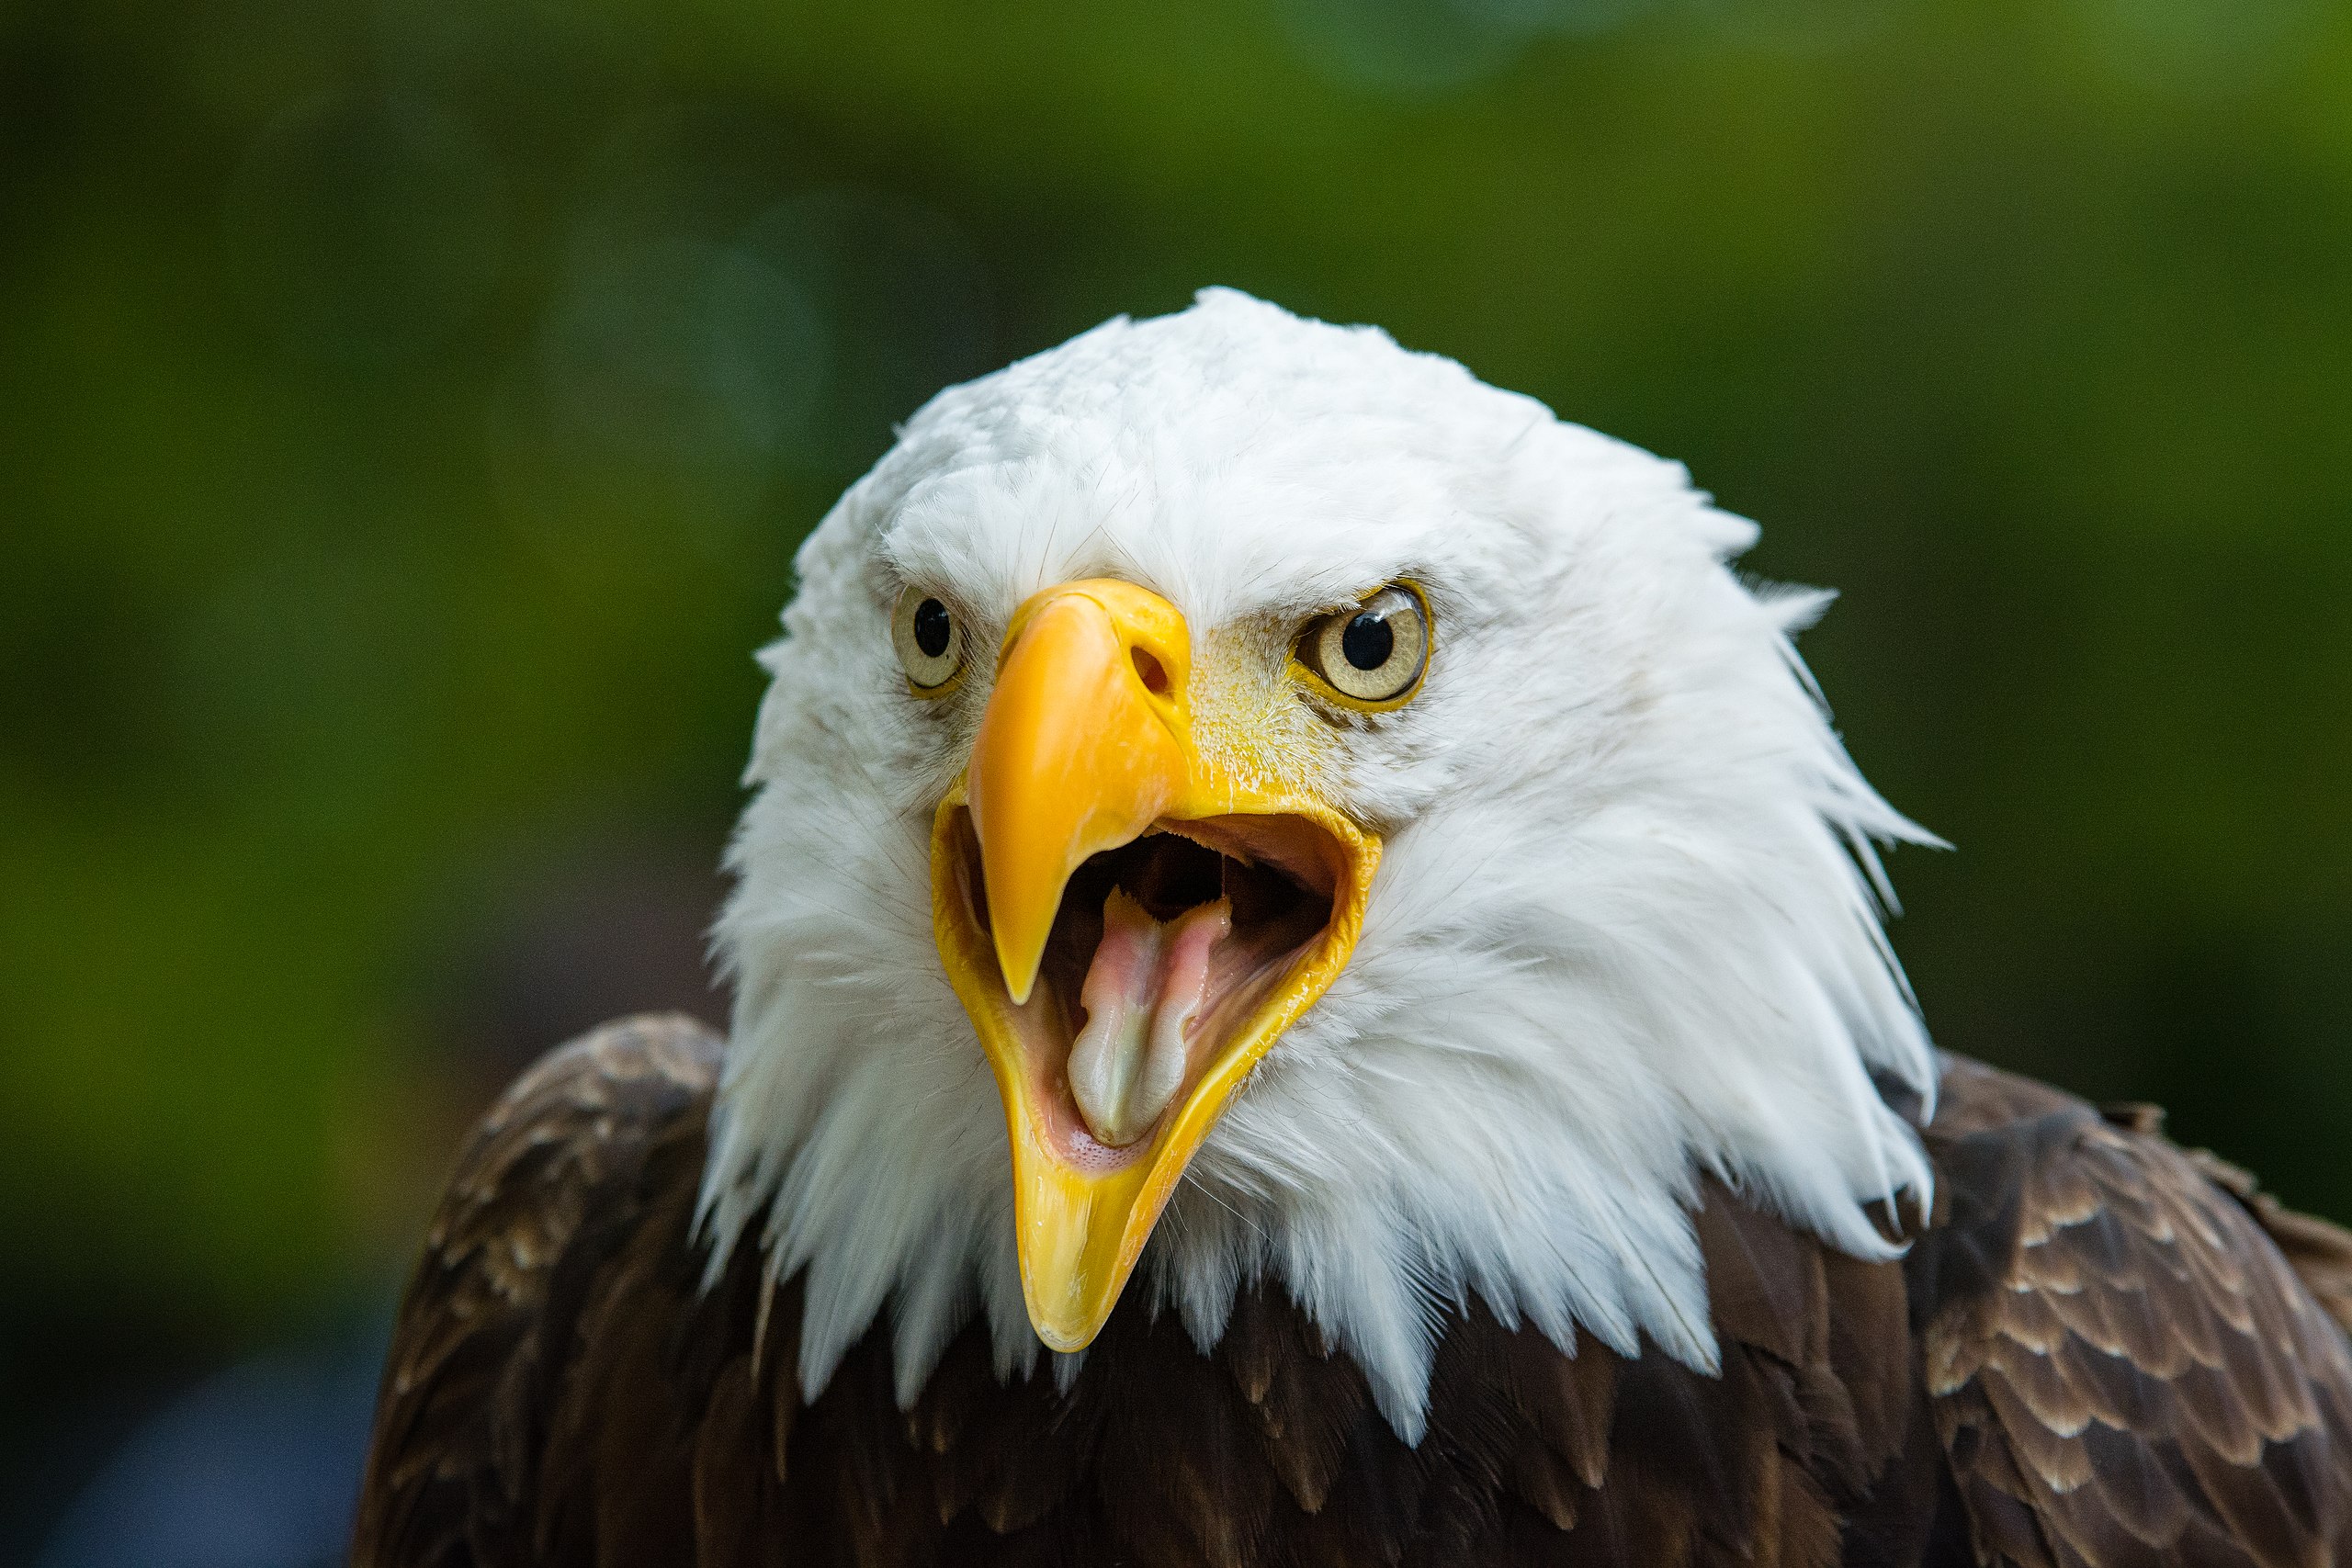 File:Bald eagle head closeup.jpg - Wikimedia Commons